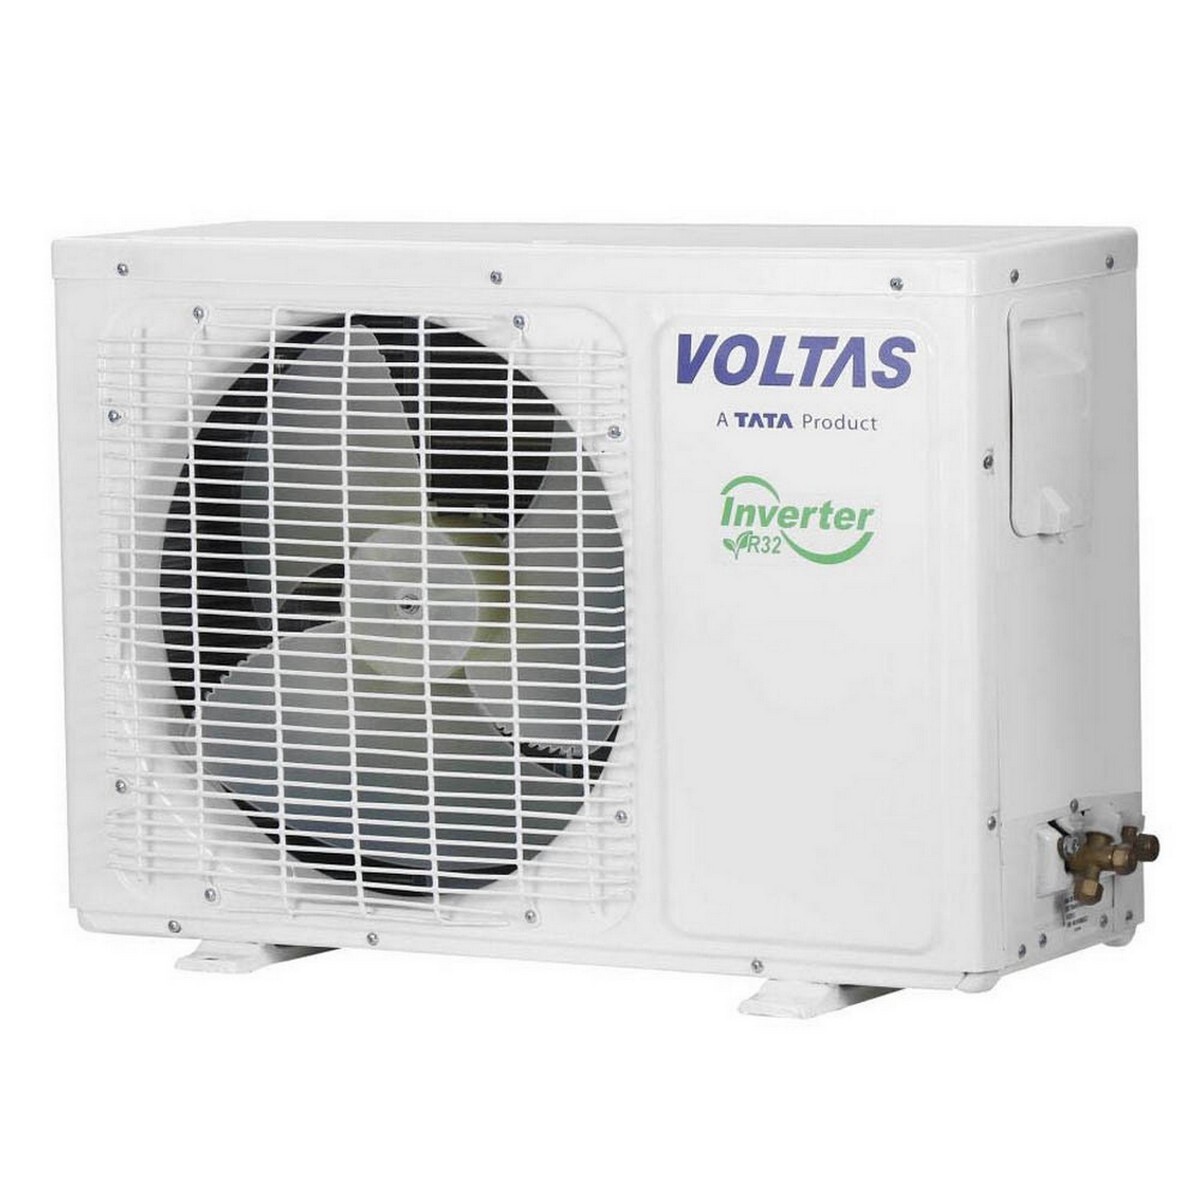 Voltas Air Conditioner Inverter 183V Vectra Prime 1.5 Ton 3 Star